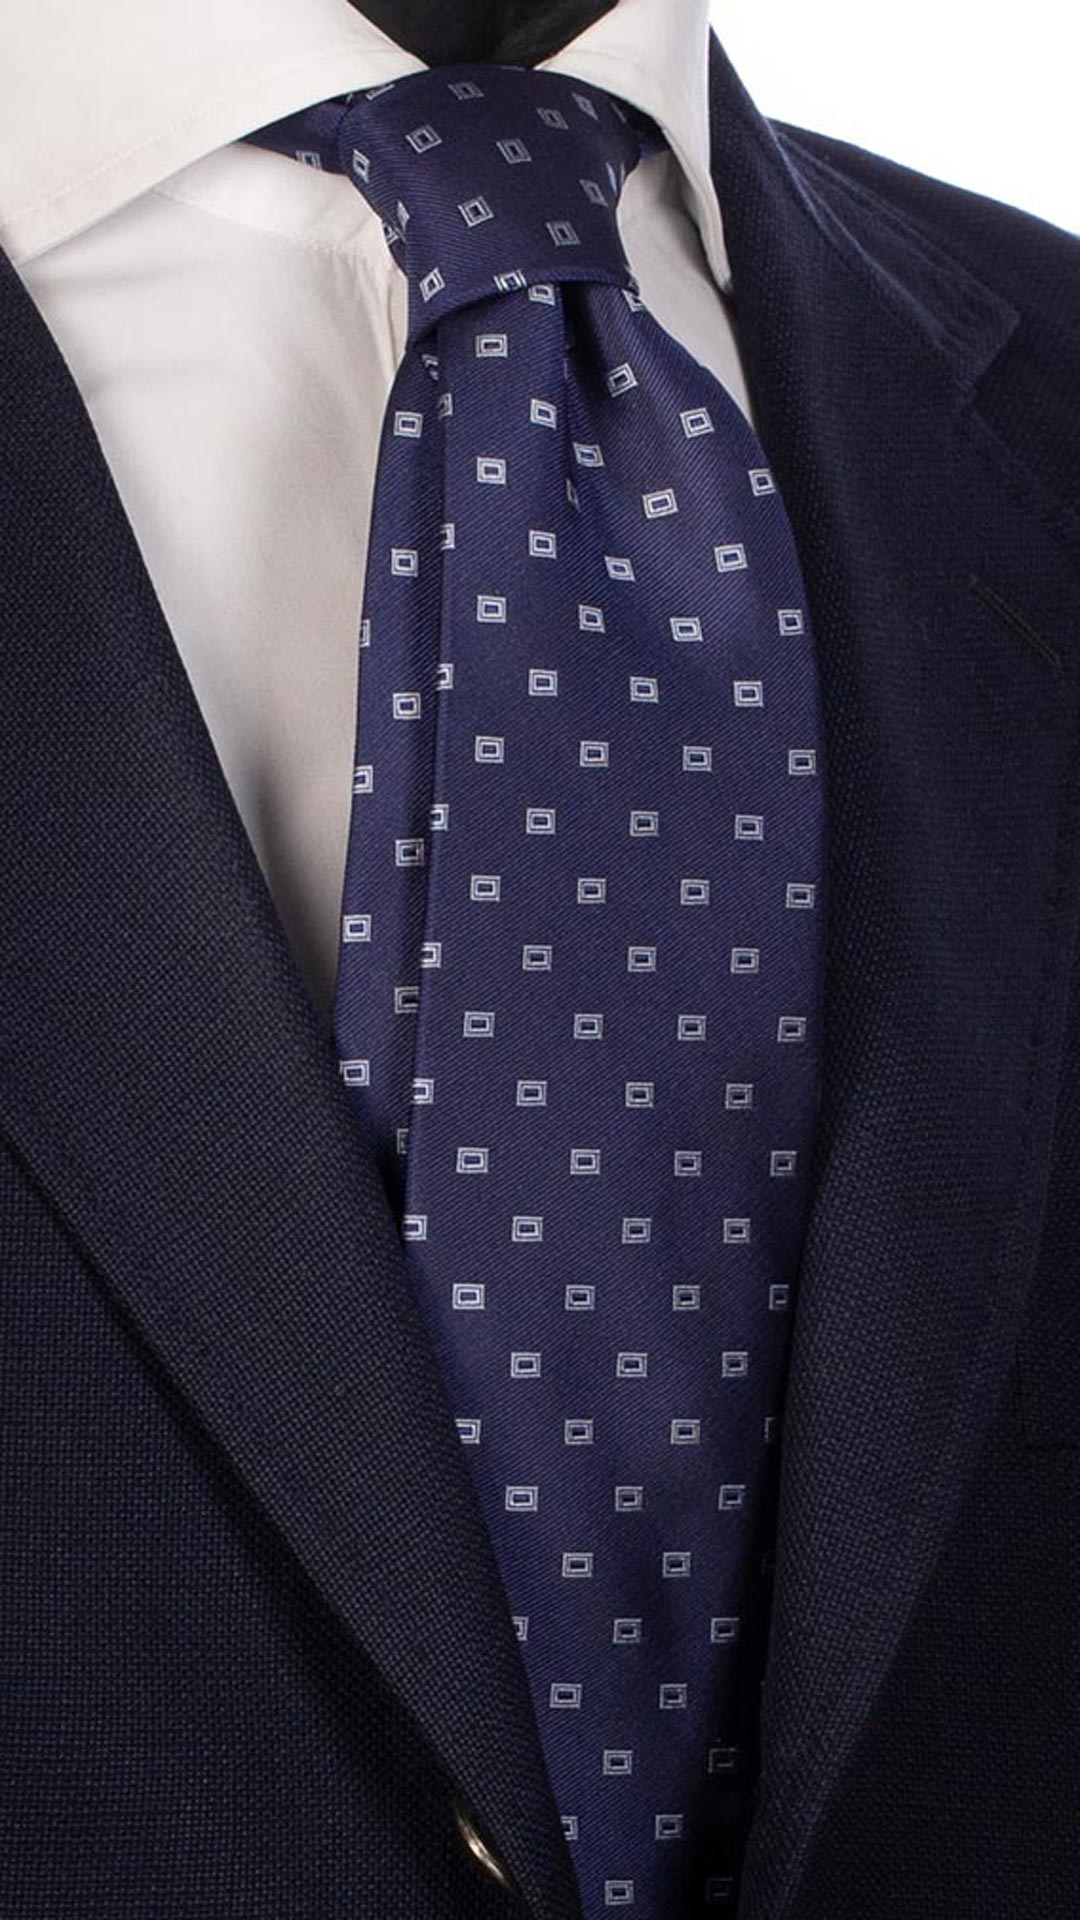 Cravatta da Cerimonia di Seta Blu Navy Fantasia Bianca CY2684 Made in Italy Graffeo Cravatte